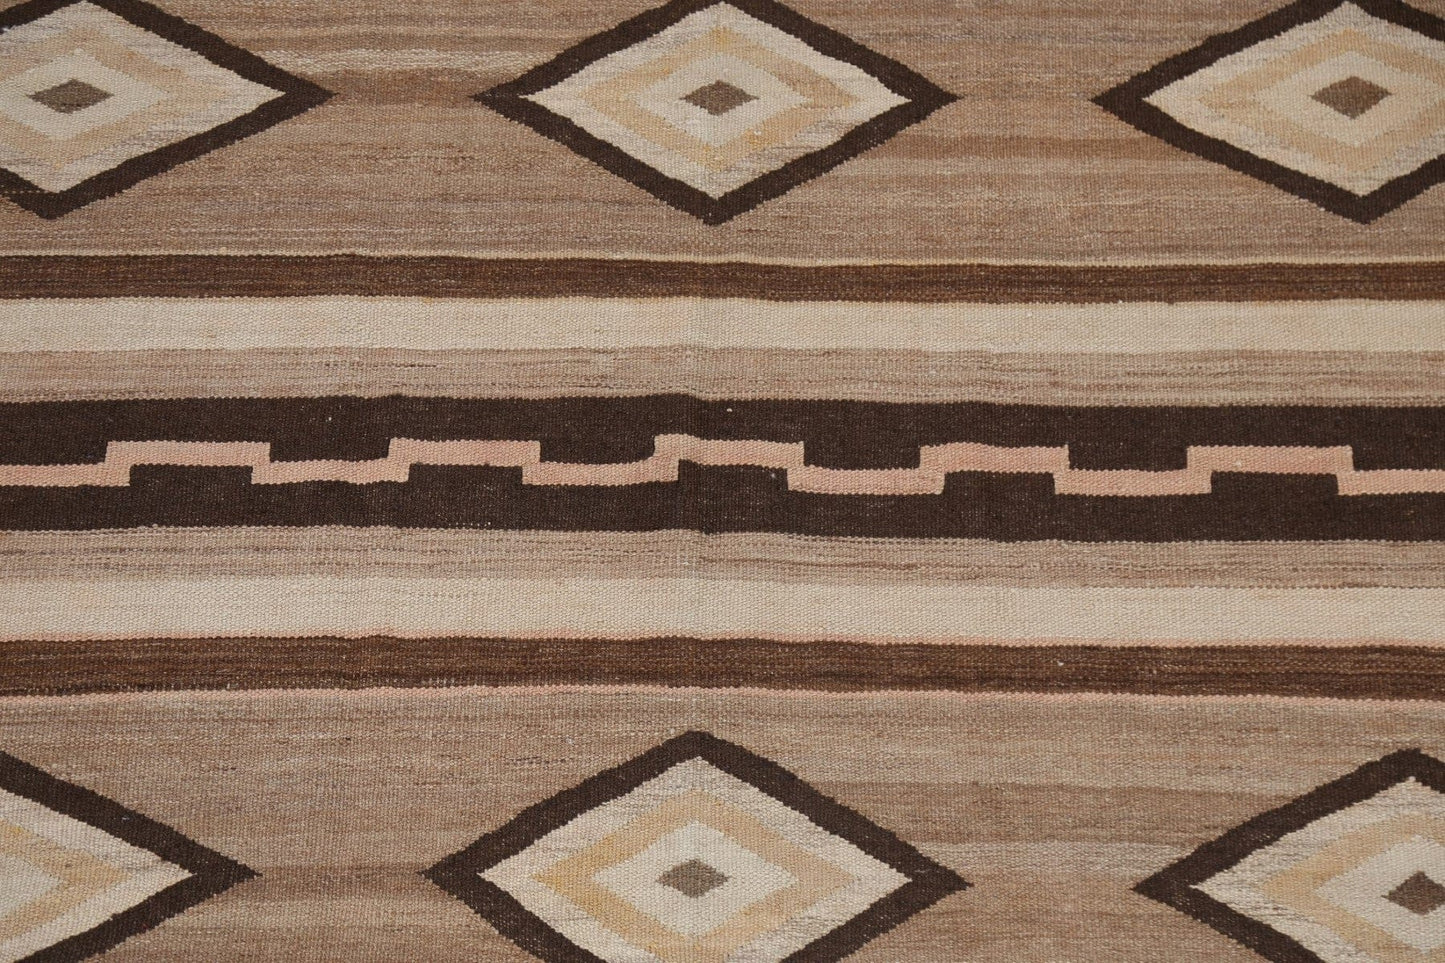 Natural Dye Kilim Oriental Brown Tribal Rug 5x10